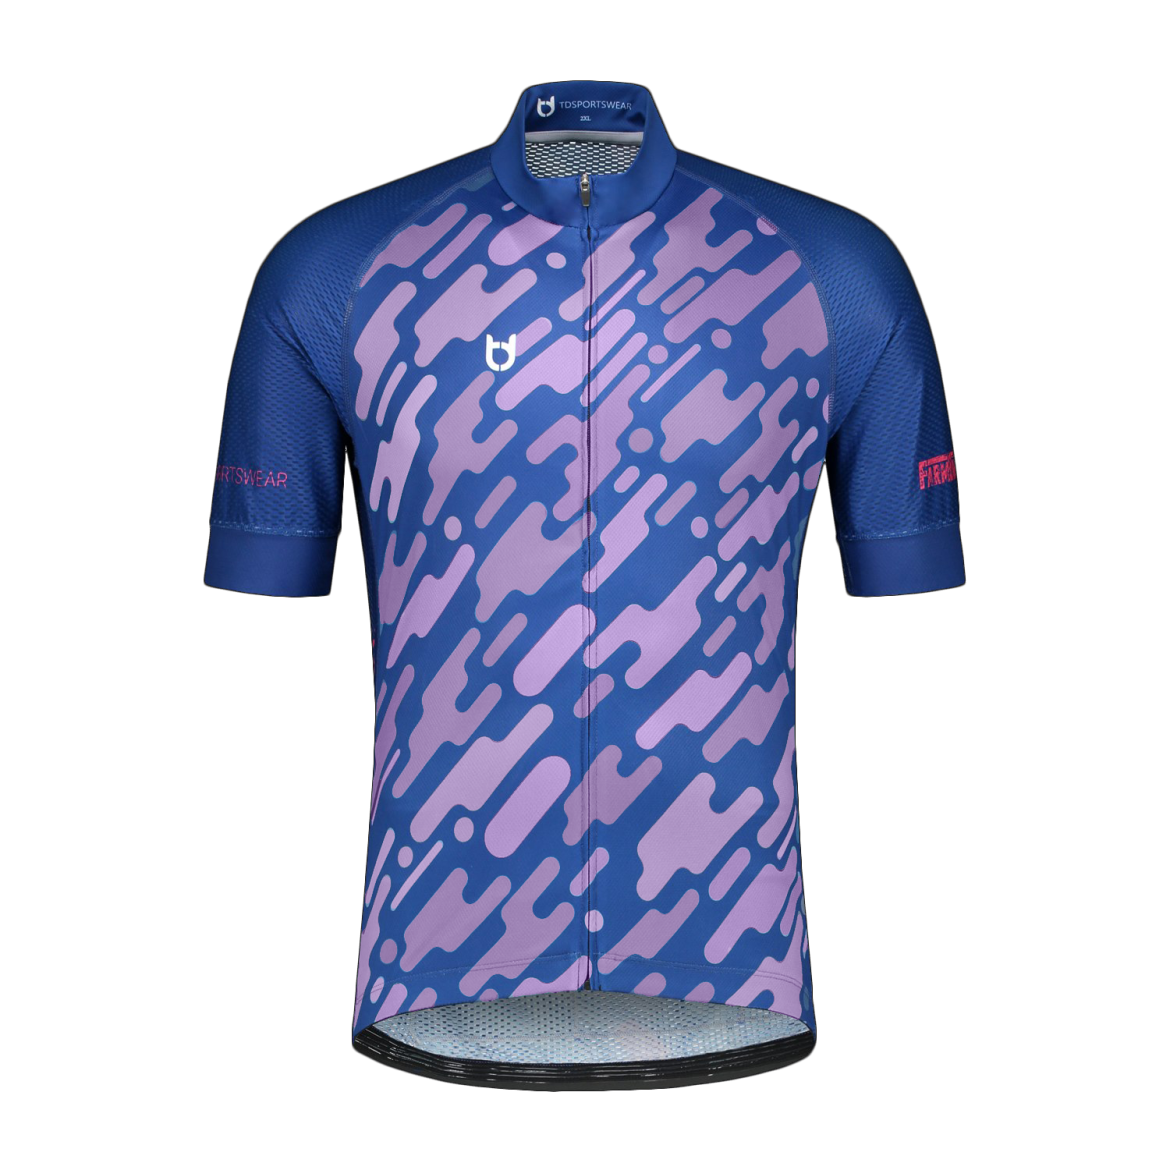 Pro 800 custom cycling jersey